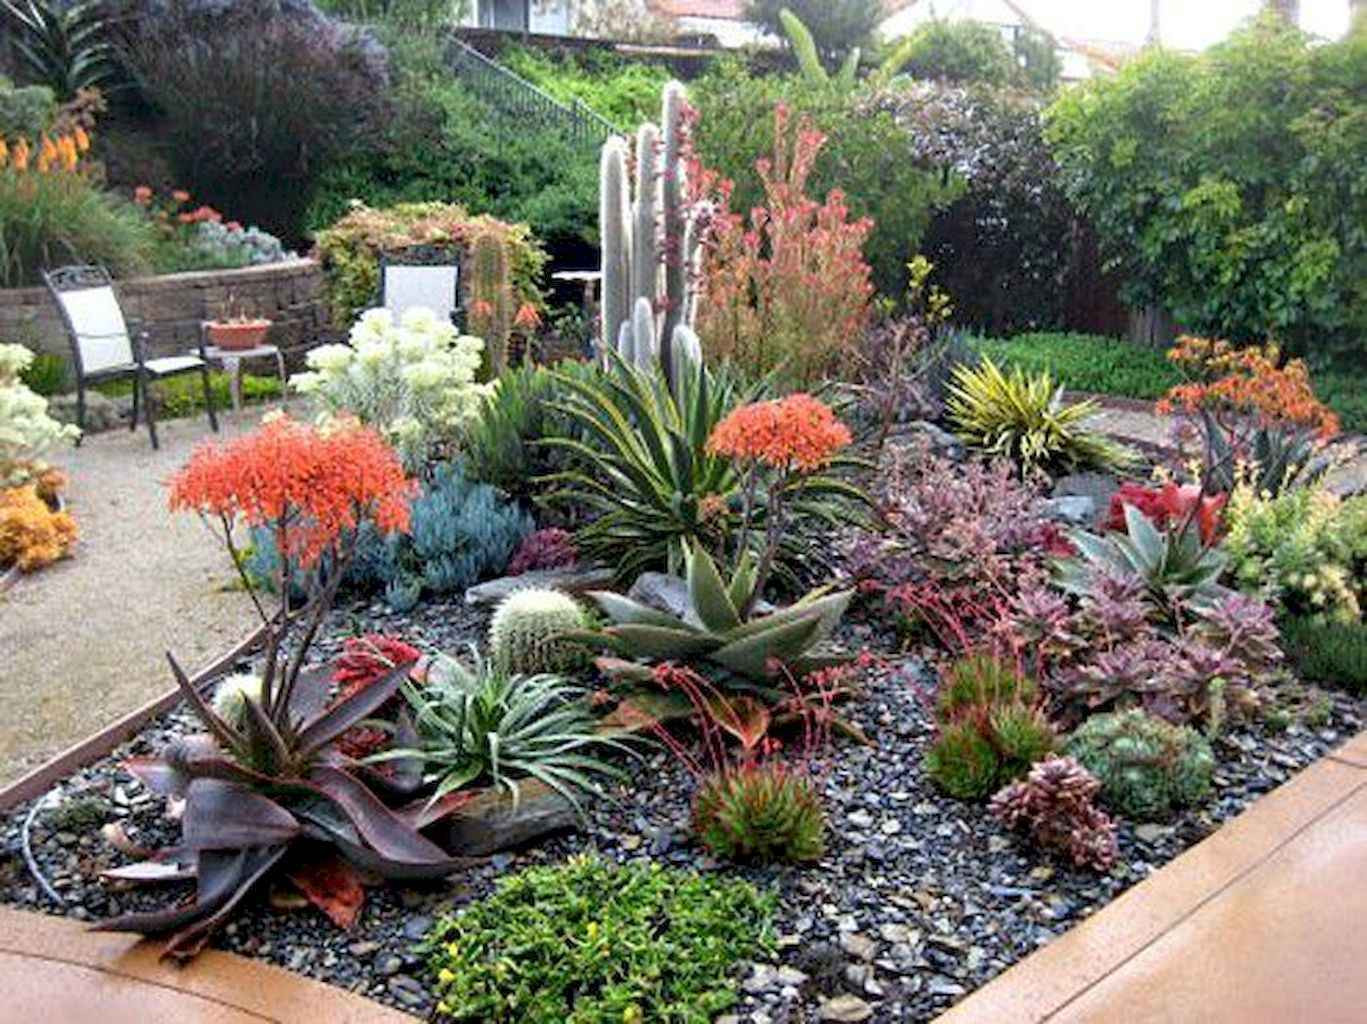 Best ideas about Rock Garden Ideas For Front Yard
. Save or Pin 70 Gorgeous Front Yard Rock Garden Landscaping Ideas Now.